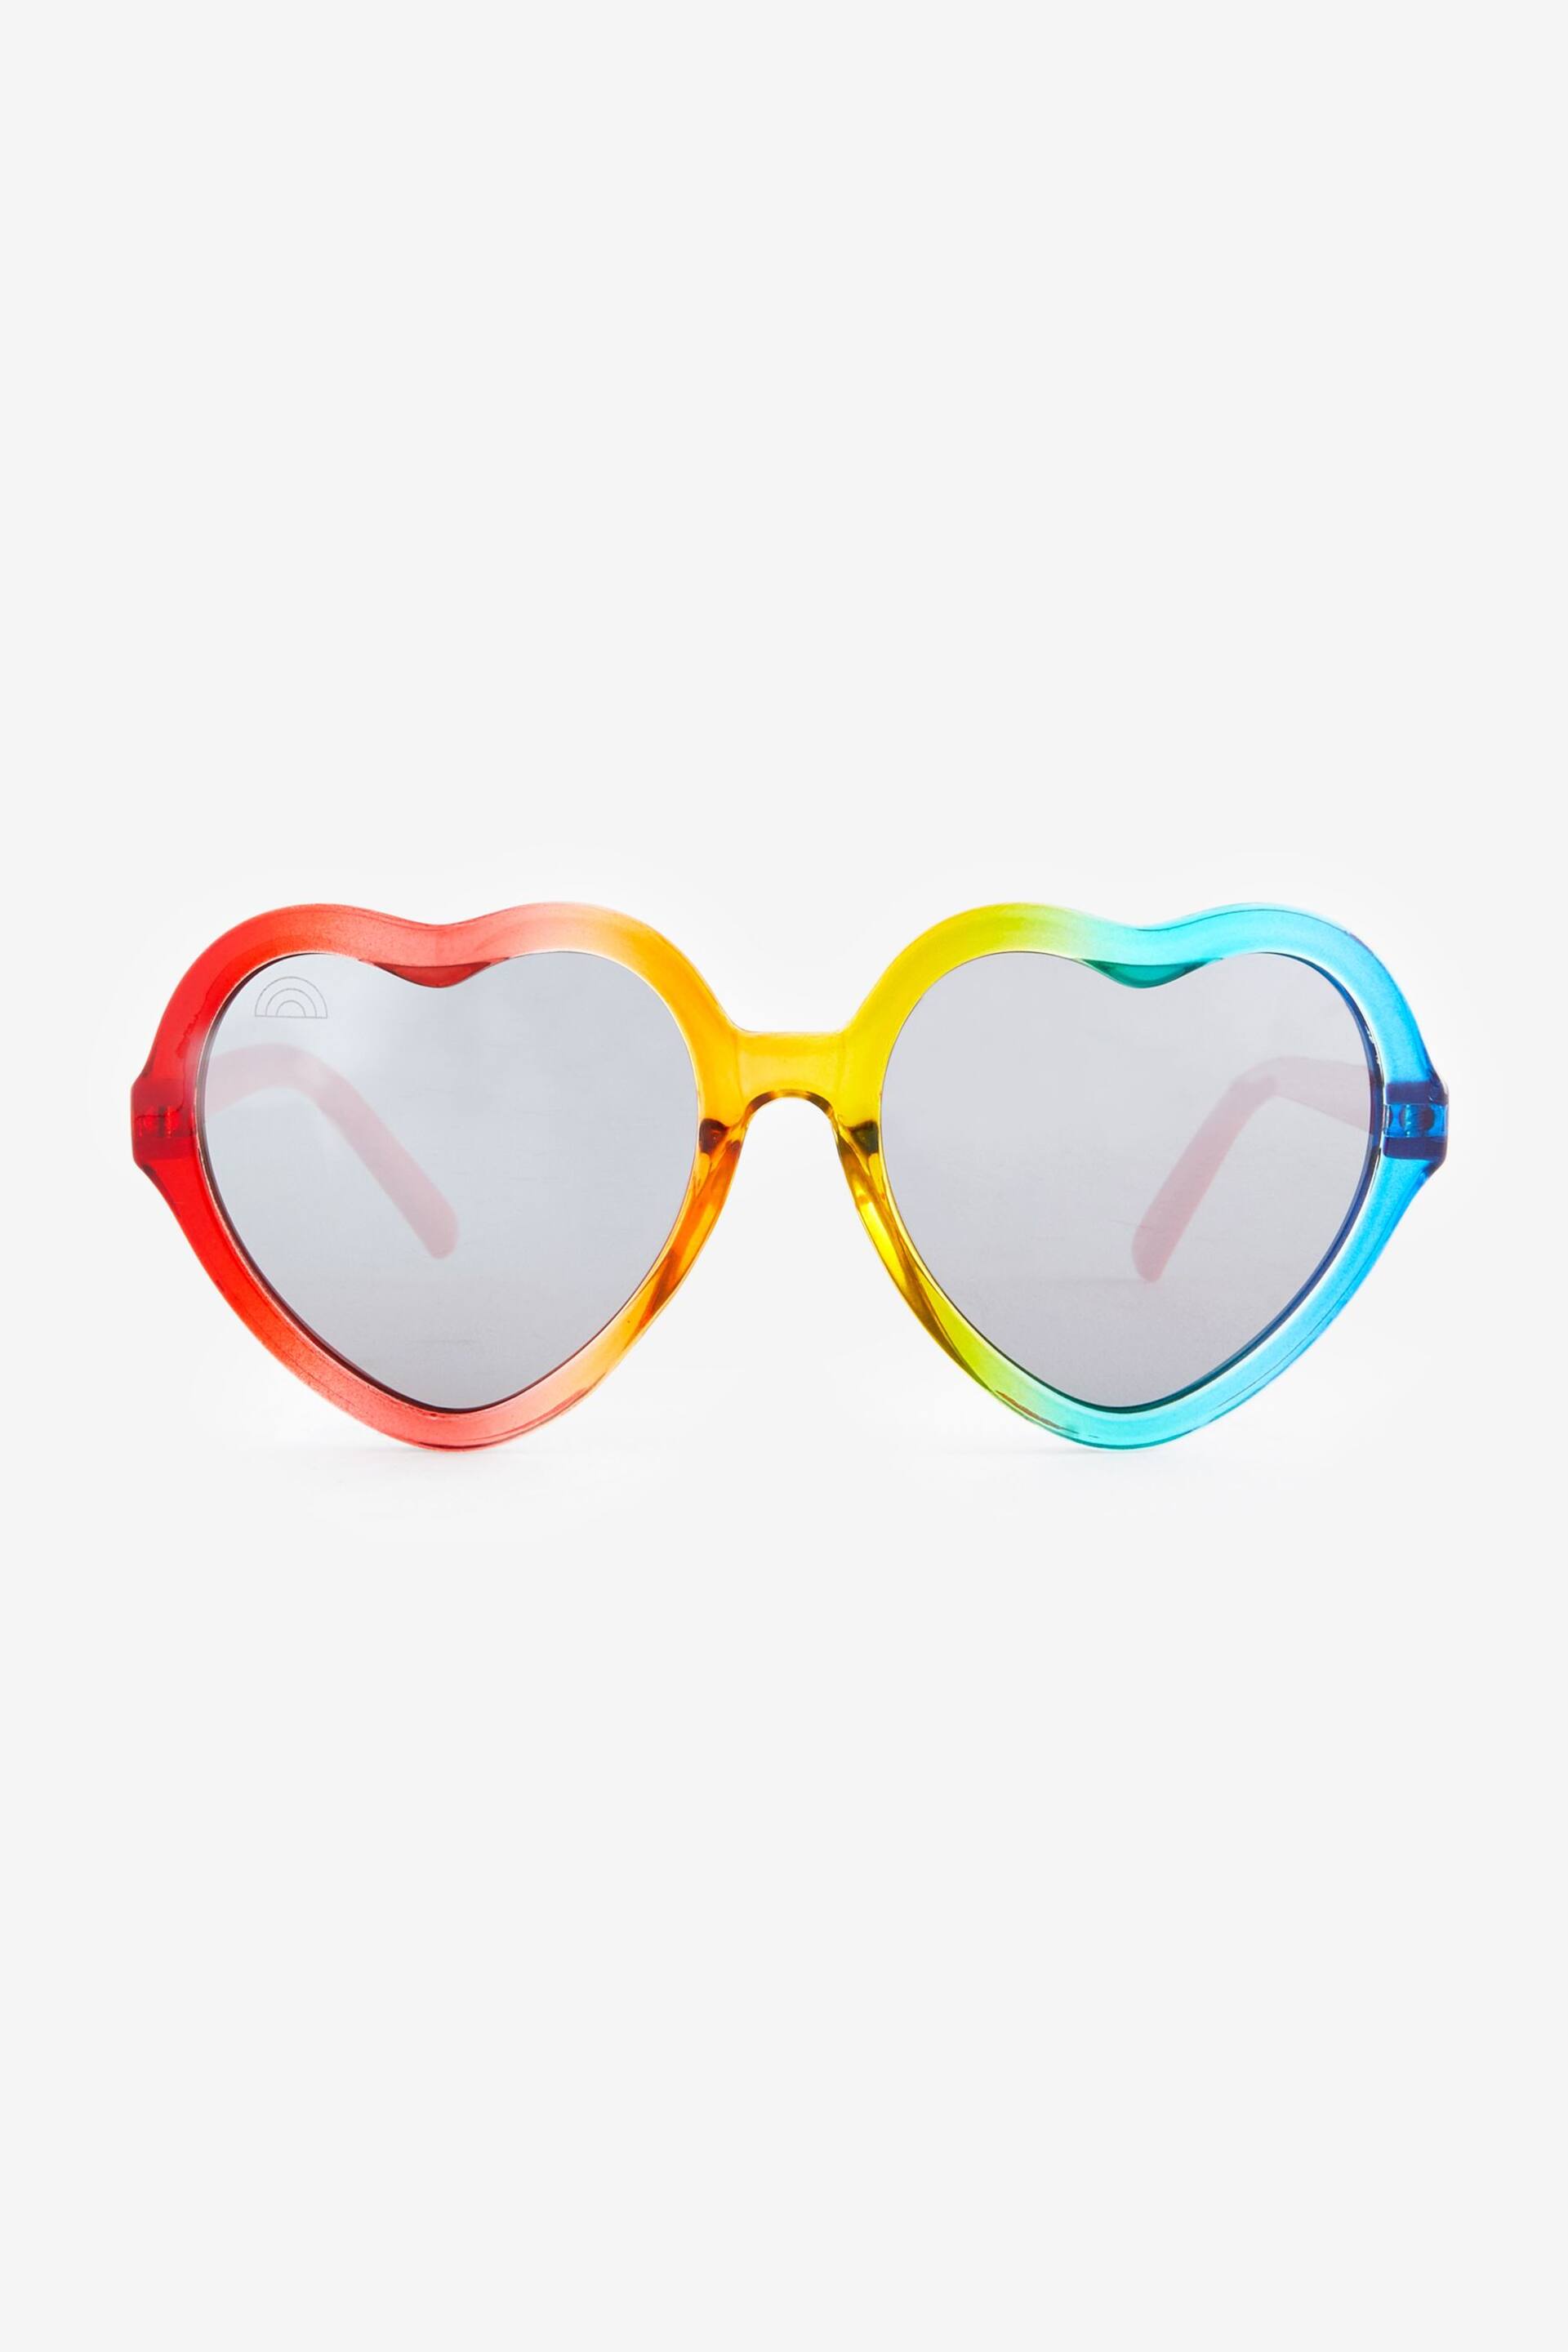 Little Bird by Jools Oliver Multi Ombré Rainbow Heart Sunglasses - Image 3 of 4